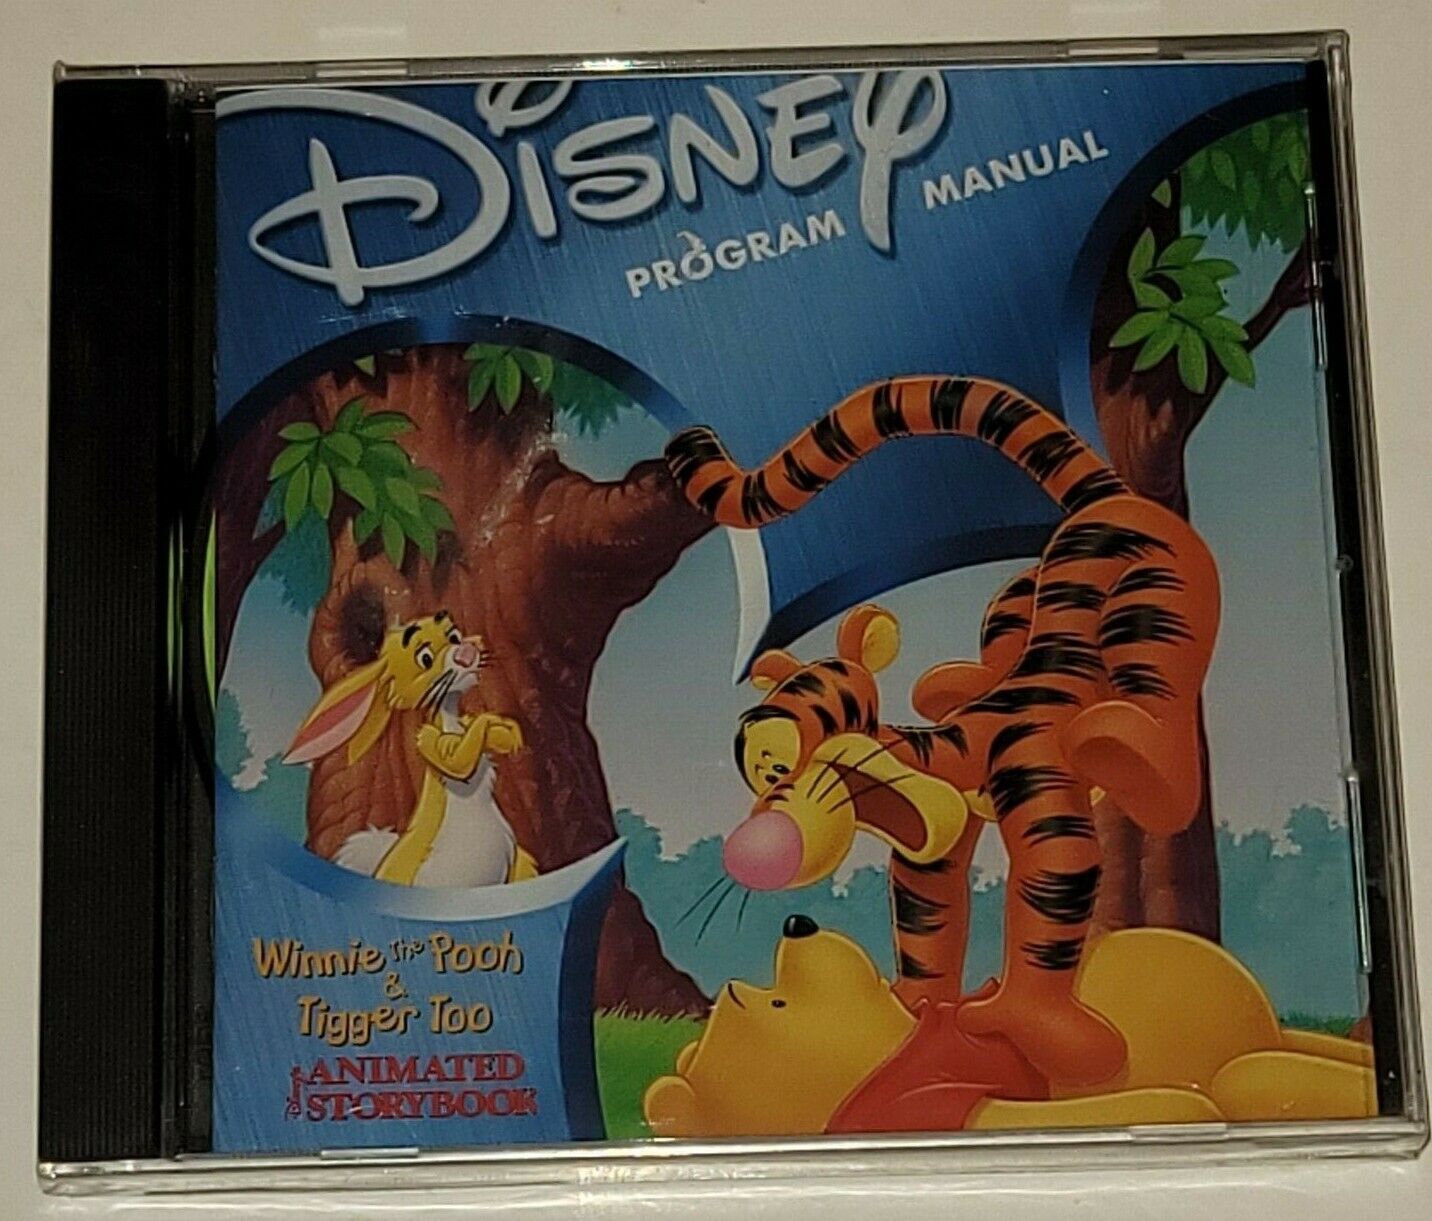 Disney - Winnie the Pooh & Tigger Too - Program Manual (Toddler) PC CD Rom 